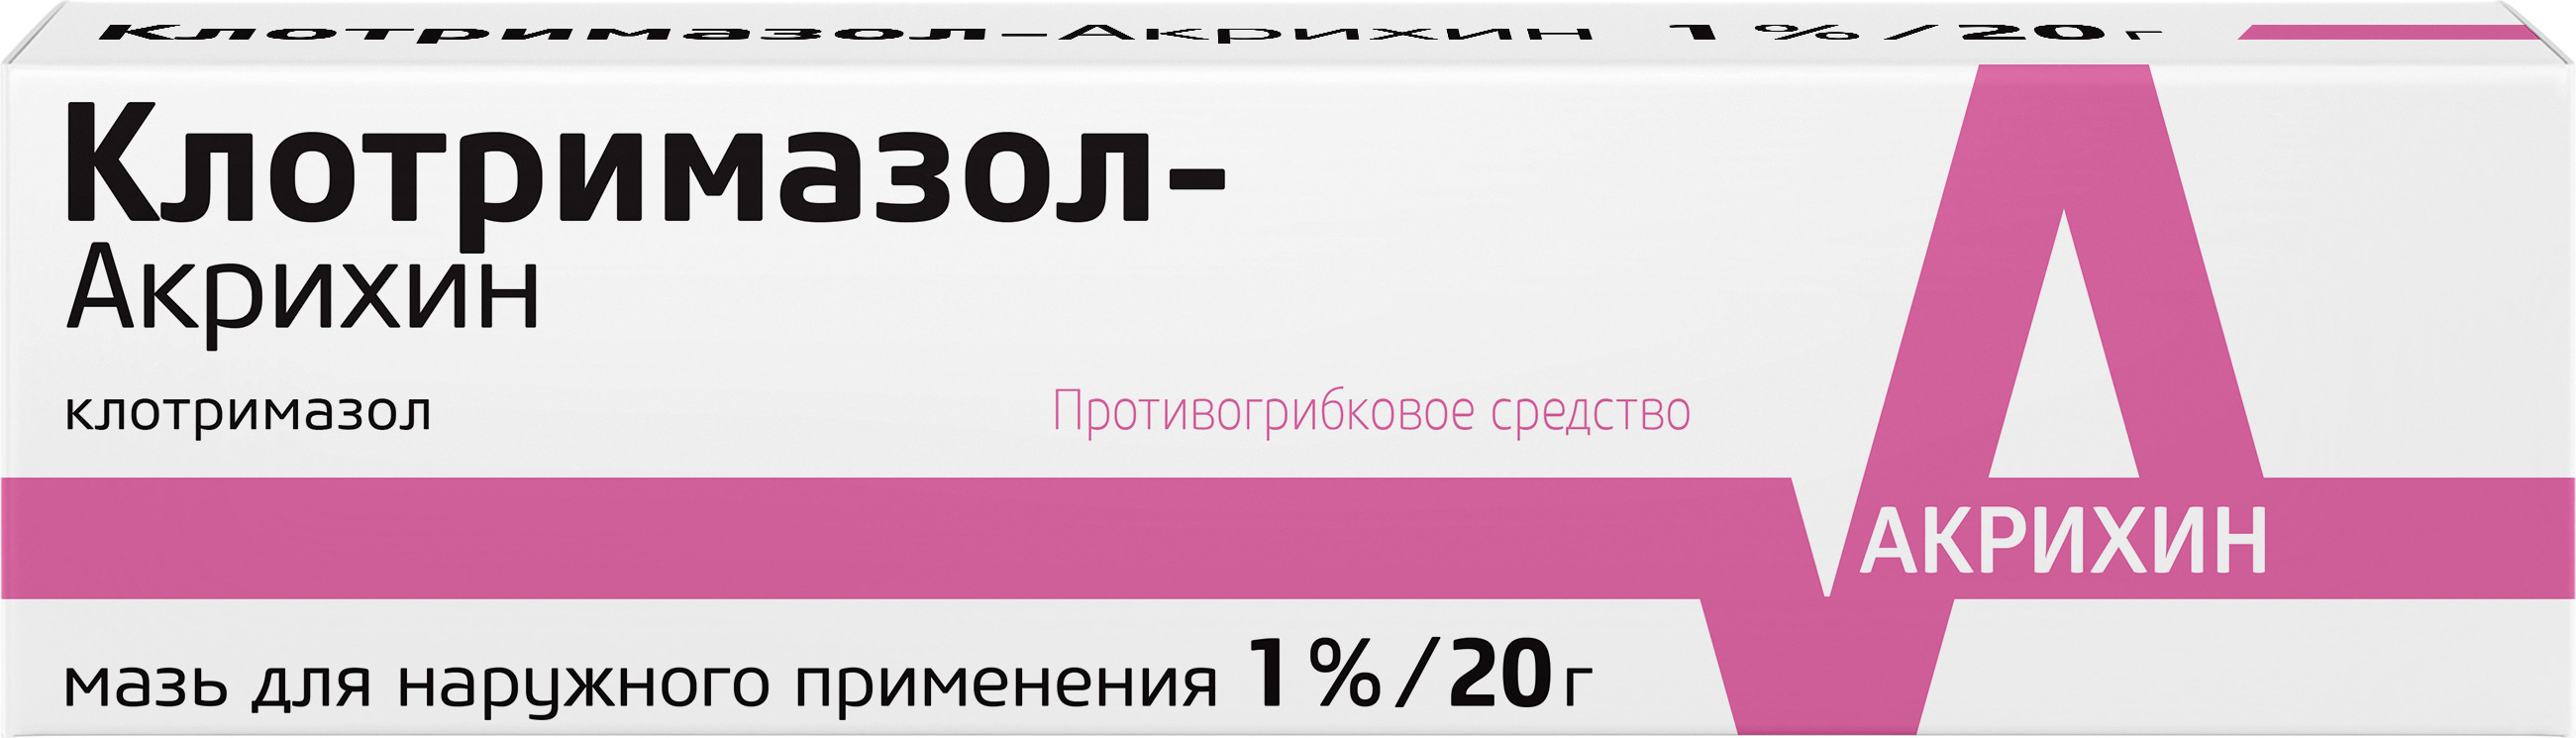 Клотримазол-Акрихин, мазь 1%, 20 г клотримазол вертекс мазь 1% 20 г